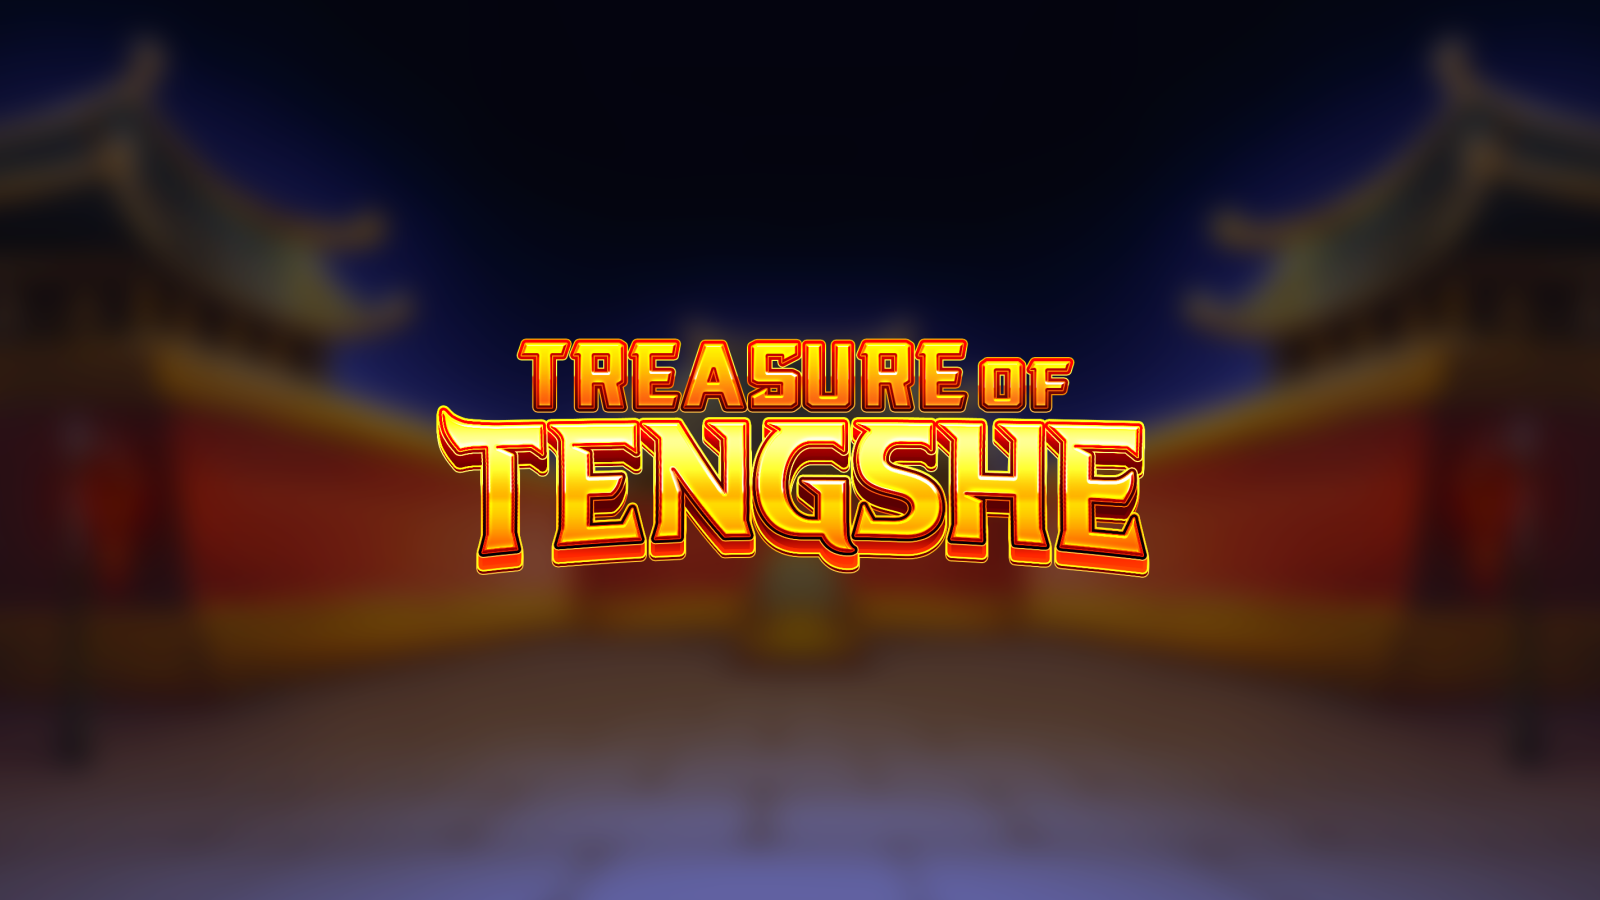 ‘TREASURE OF TENGSHE’ FROM BLUE GURU GAMES HITS ORYX HUB PLATFORM